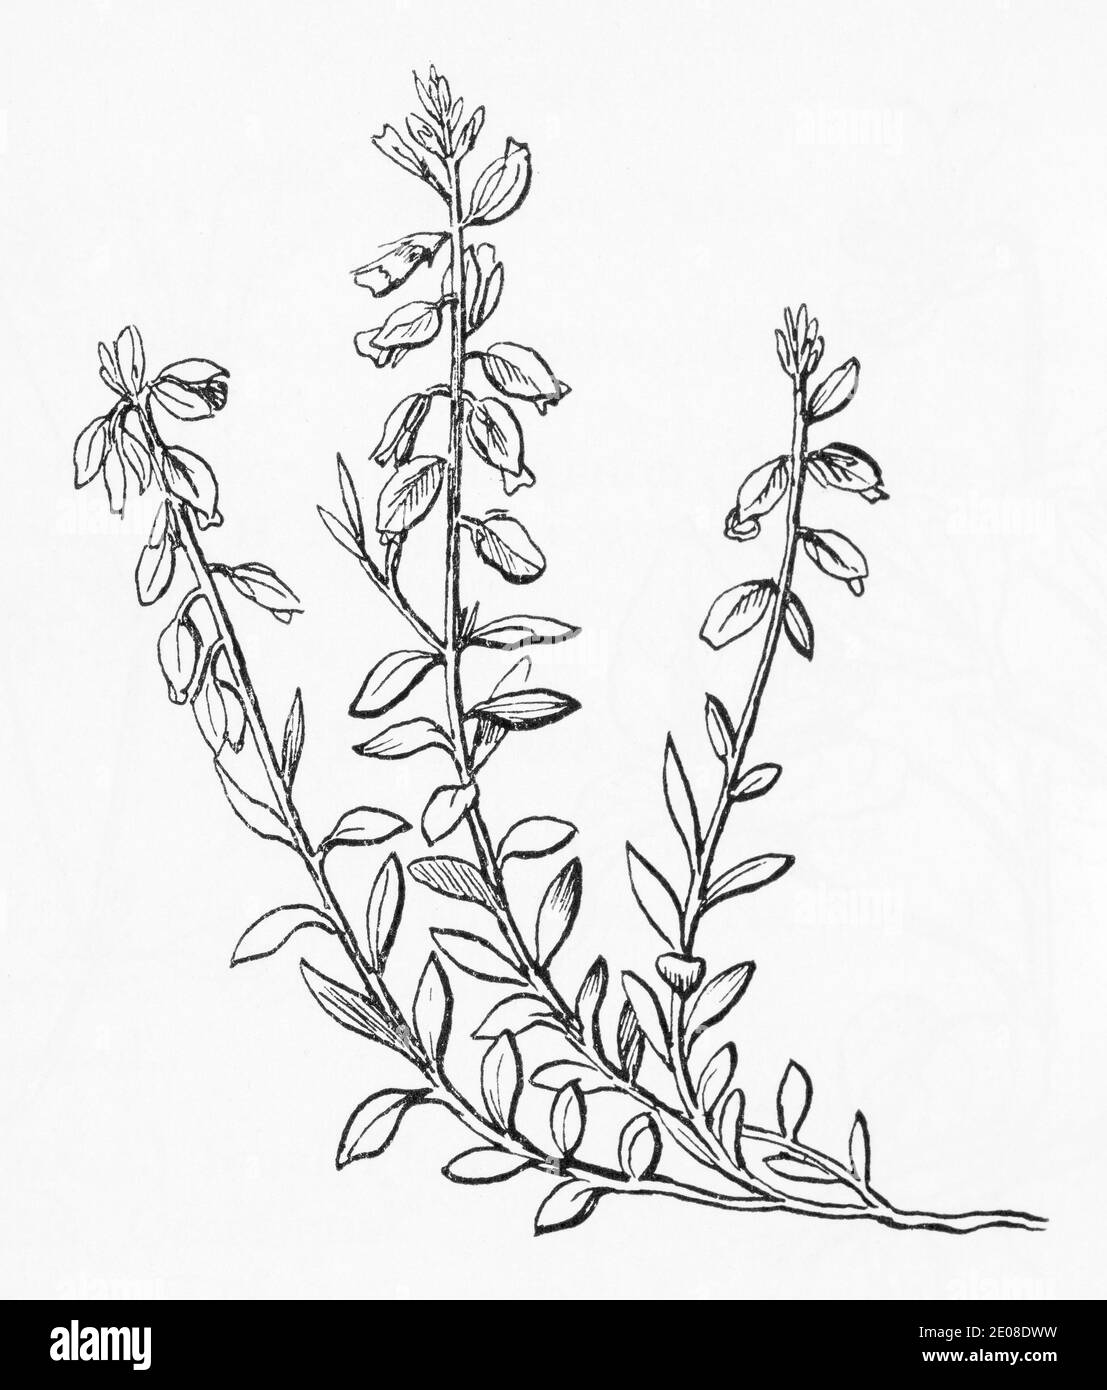 Old botanical illustration engraving of Milkwort / Polygala vulgaris. Traditional medicinal herbal plant. See Notes Stock Photo